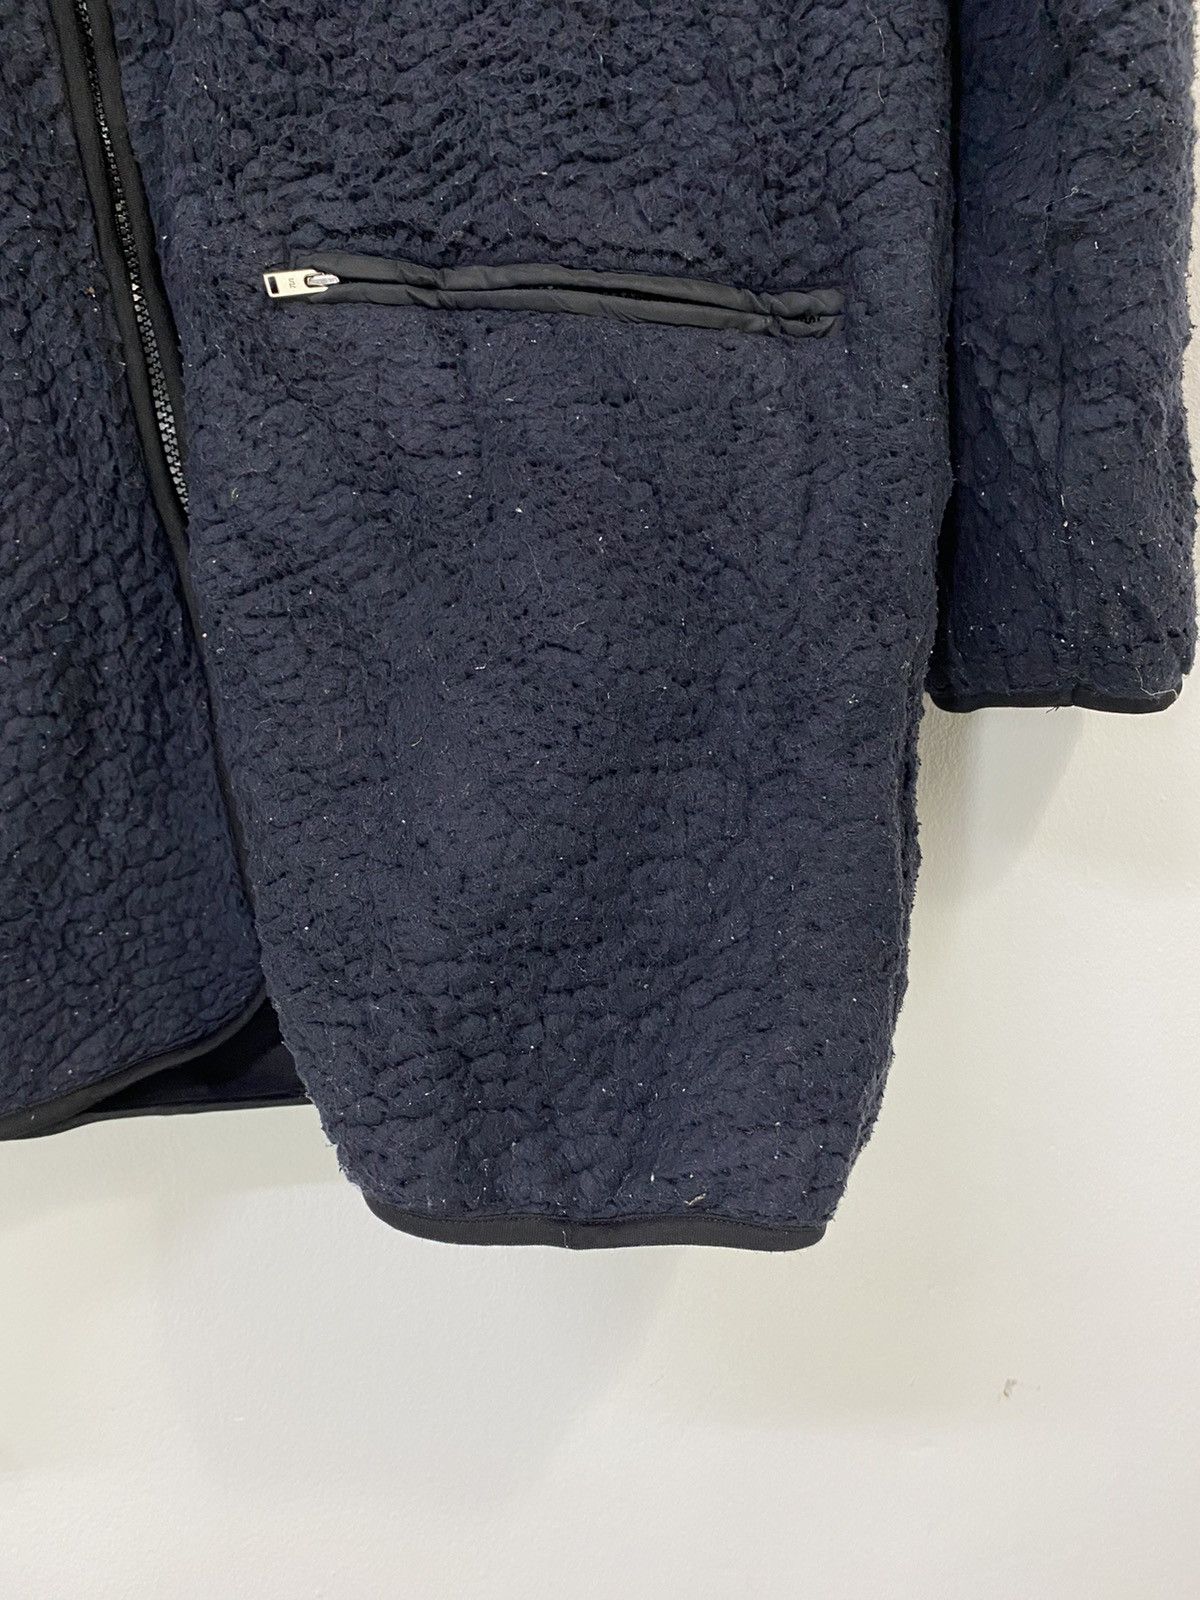 Undercover X Uniqlo Fleece Jacket Nice Design - 8